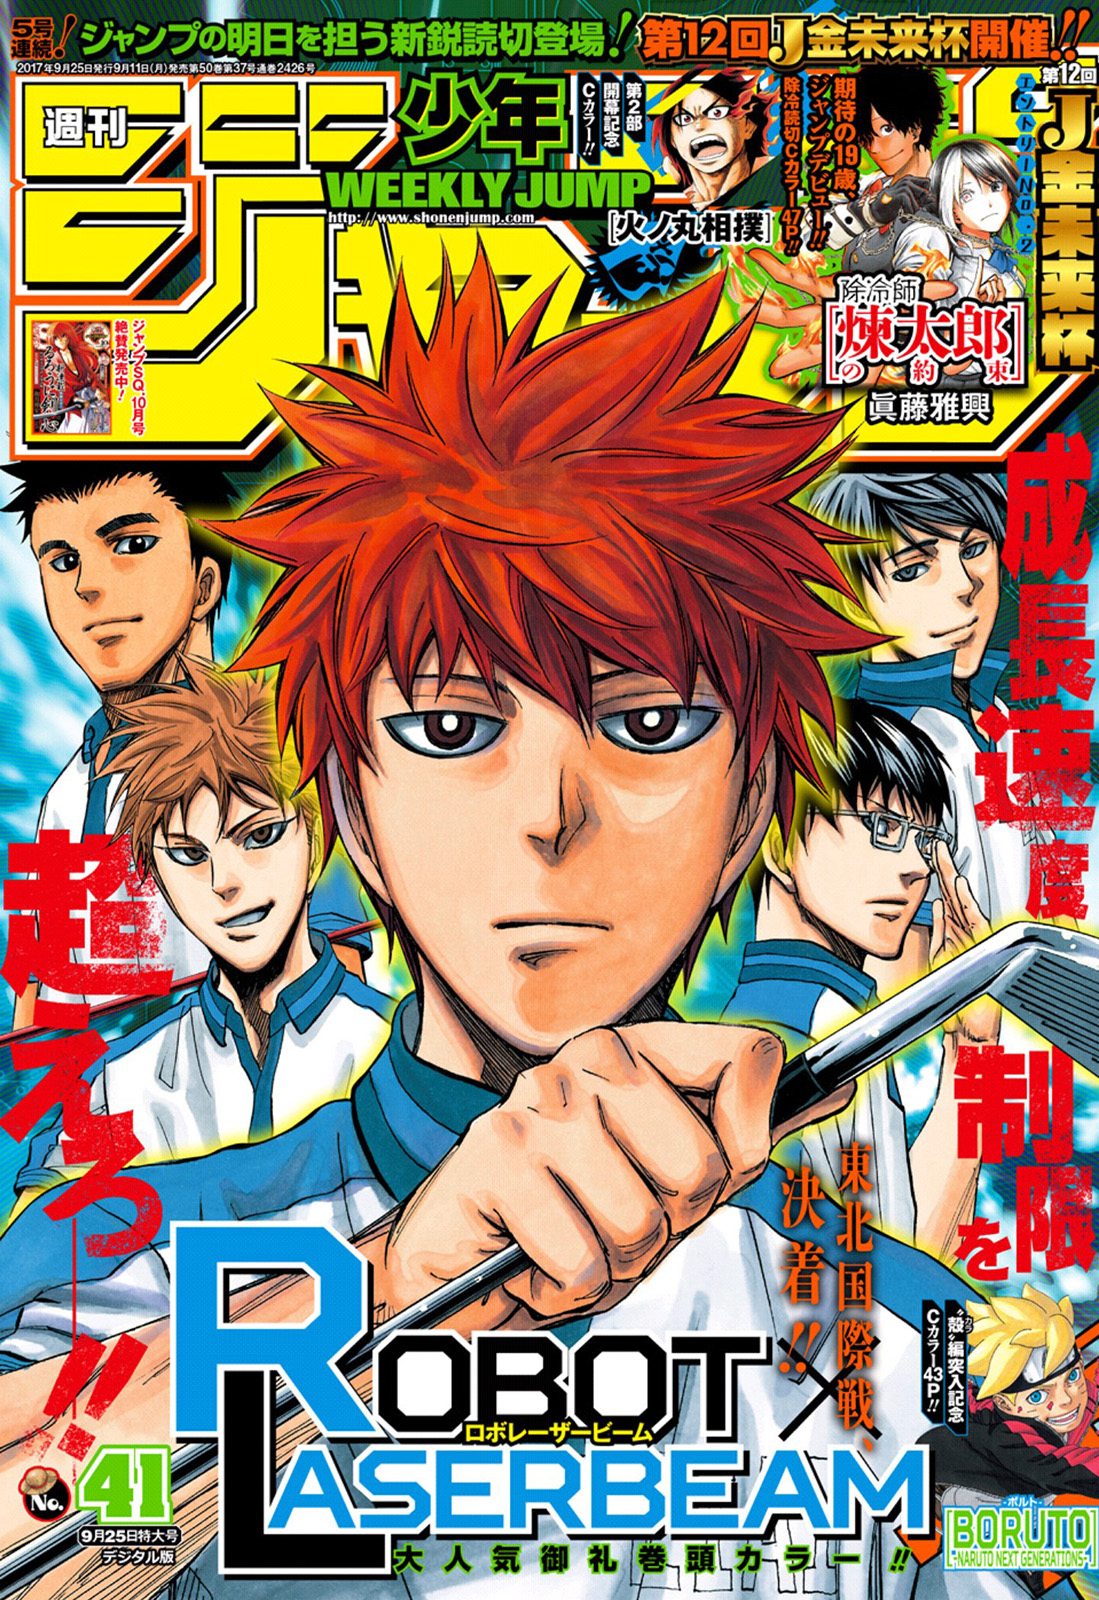 Weekly Shonen Jump Issue 41 17 Jump Database Fandom